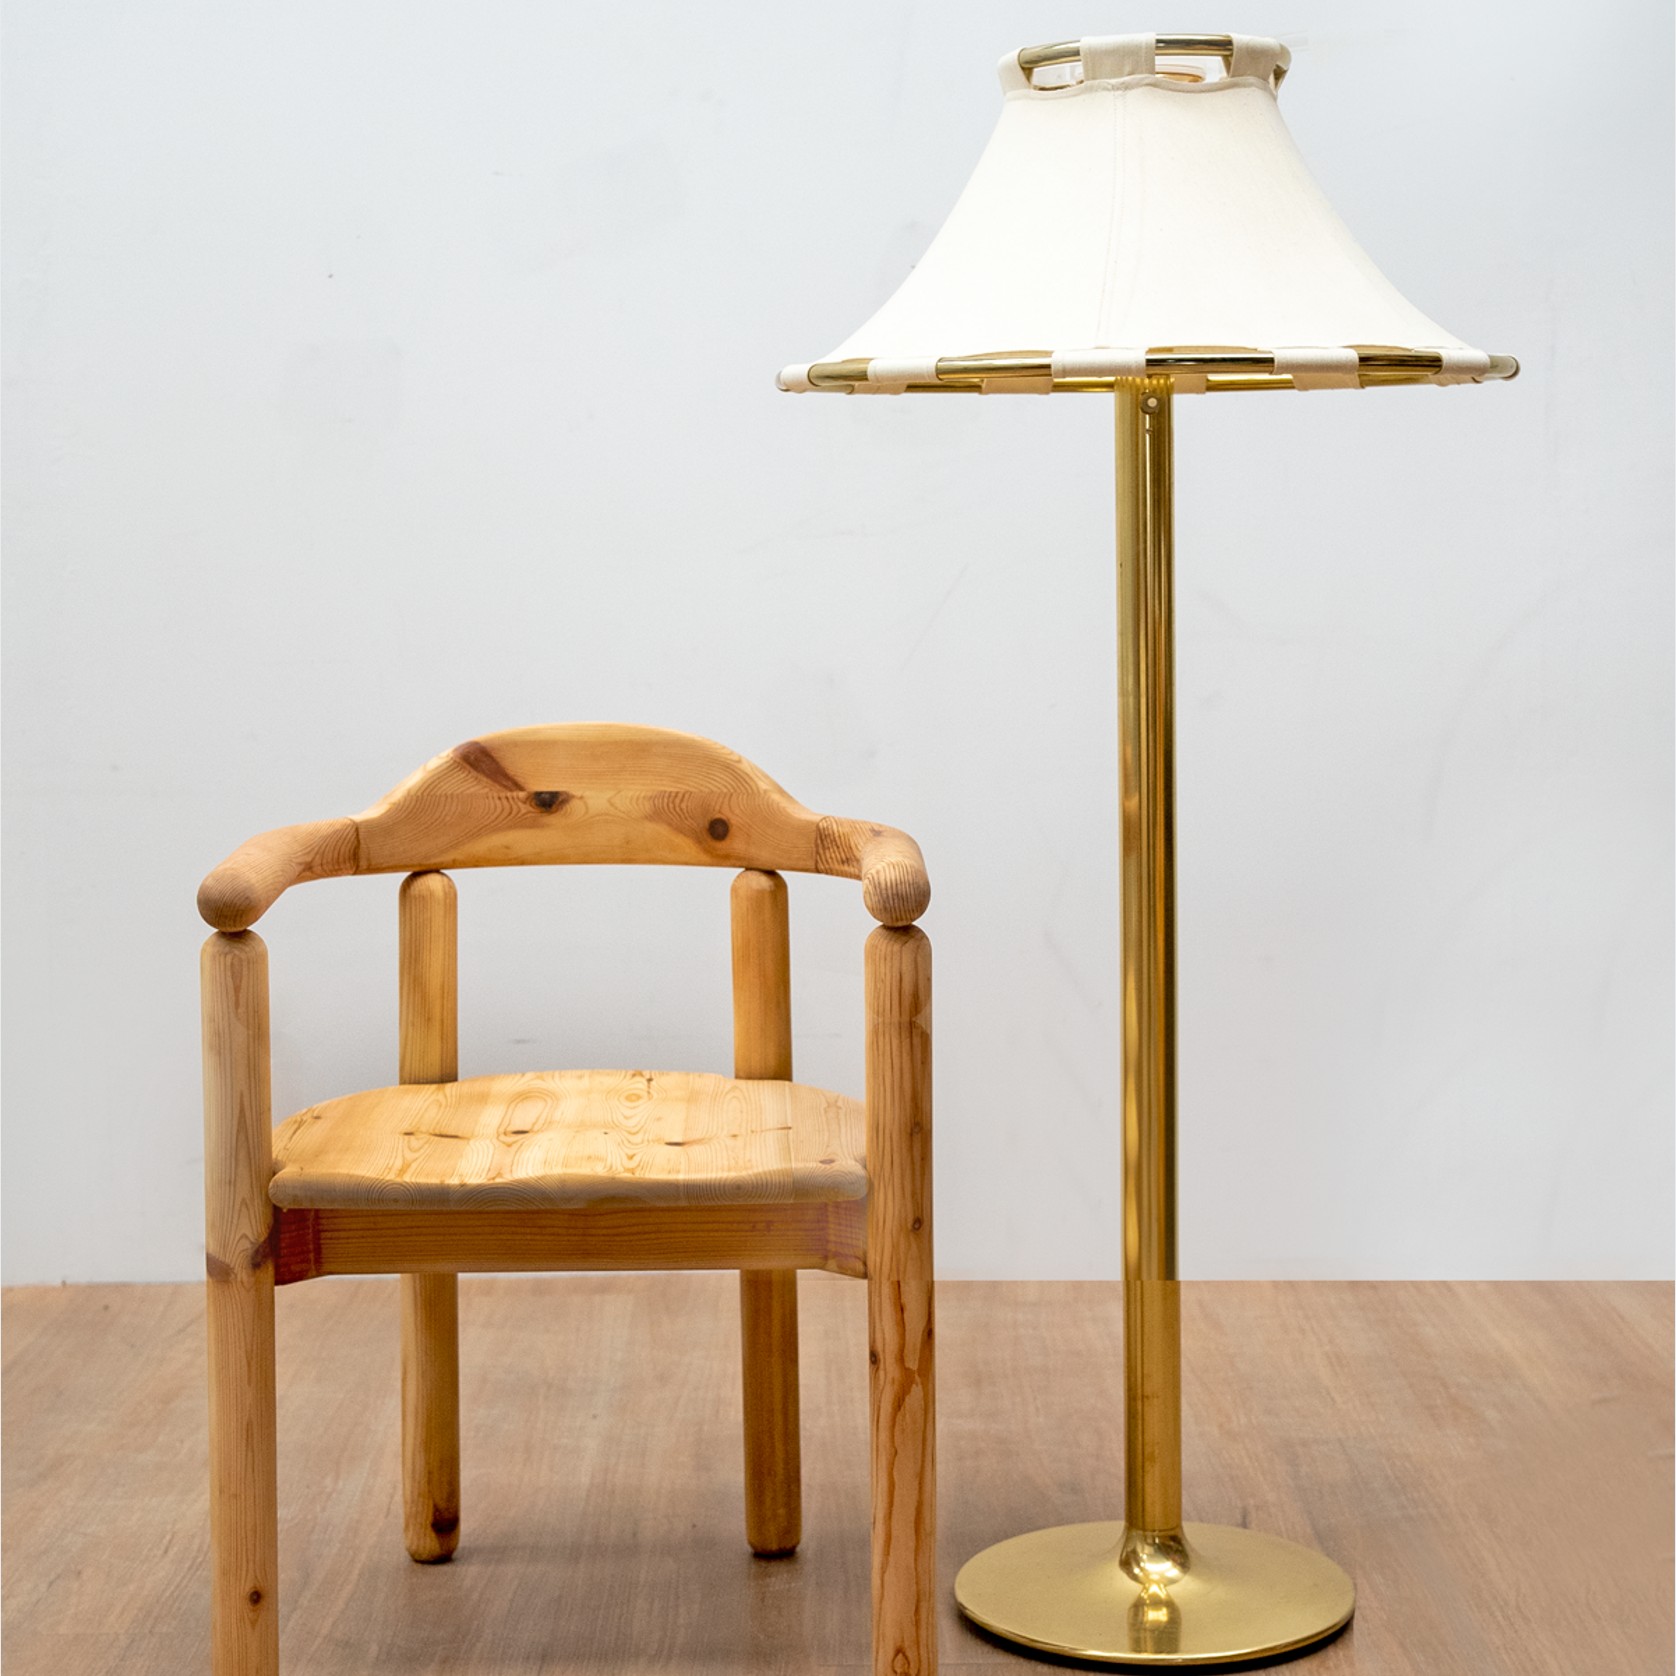 Brass Floor Lamp By Anna Ehrner For Ateljé Lyktan gallery detail image